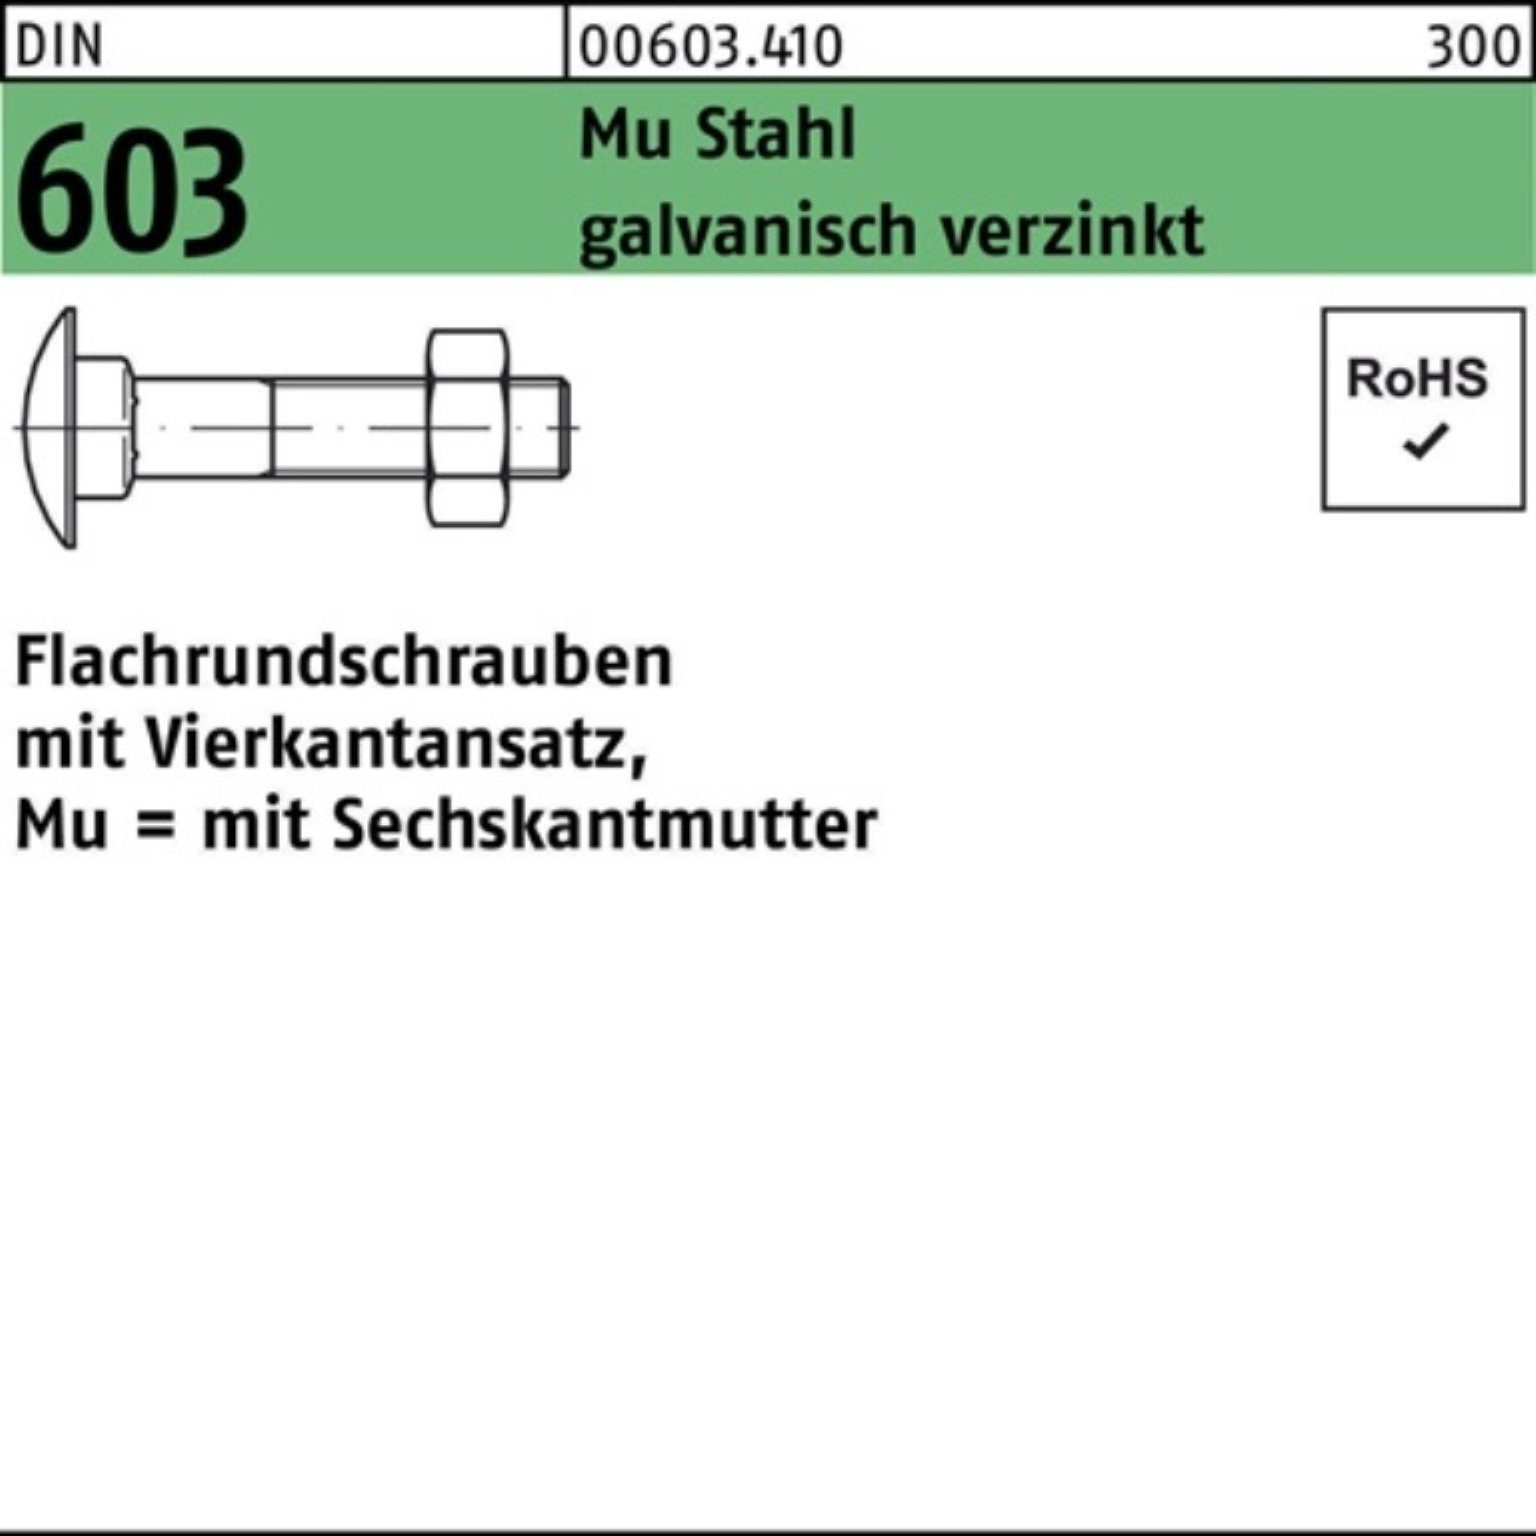 Reyher Vierkantansatz/6-ktmutter Schraube Pack M12x100 DIN 100er 603 Flachrundschraube